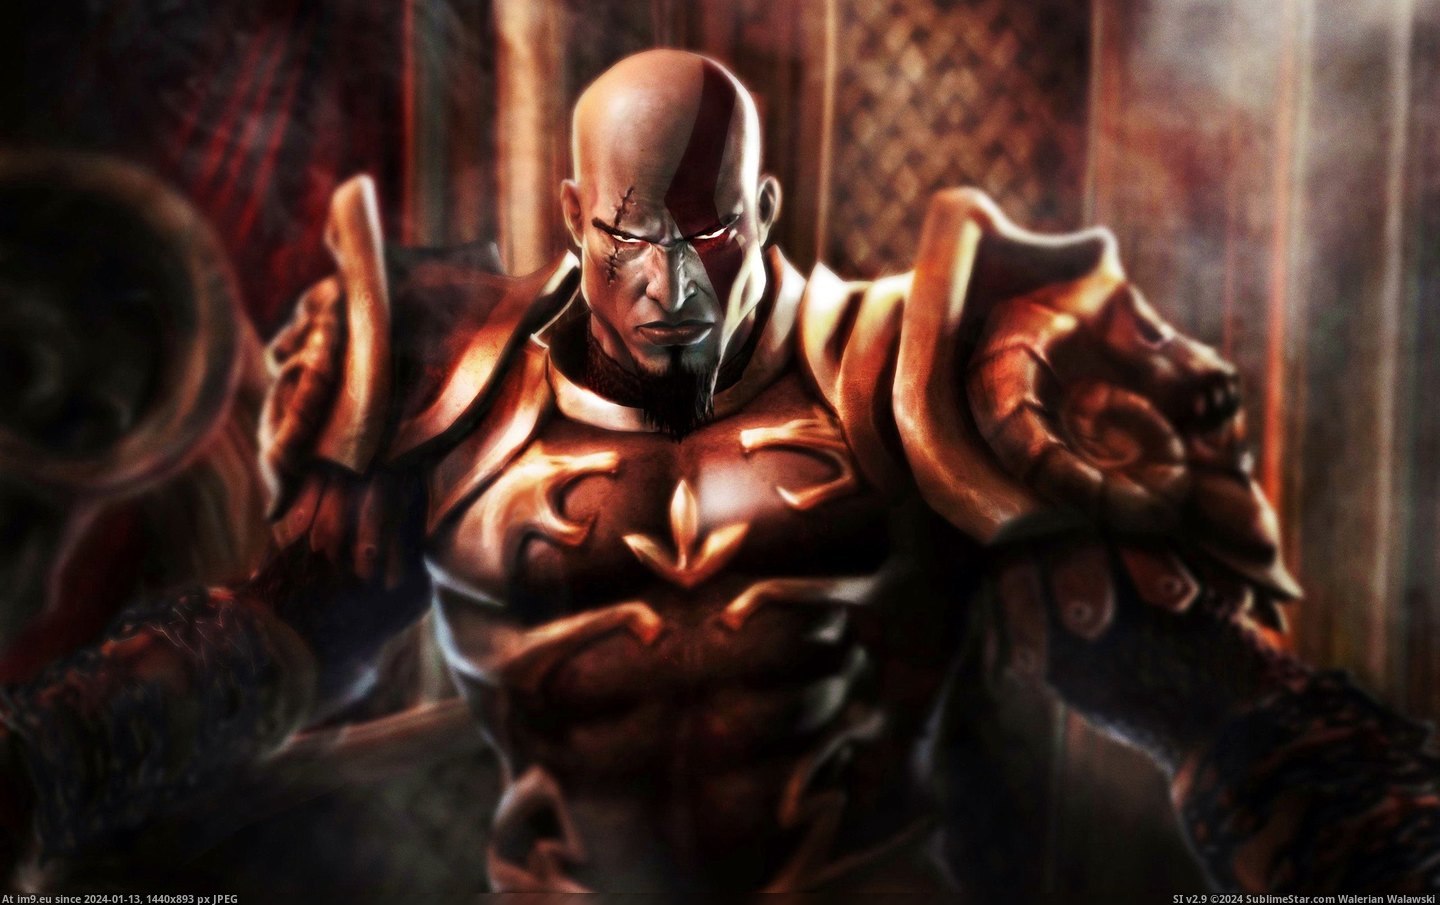 #Wallpaper #Wide #Kratos #War #God Kratos God Of War Wide HD Wallpaper Pic. (Изображение из альбом Unique HD Wallpapers))